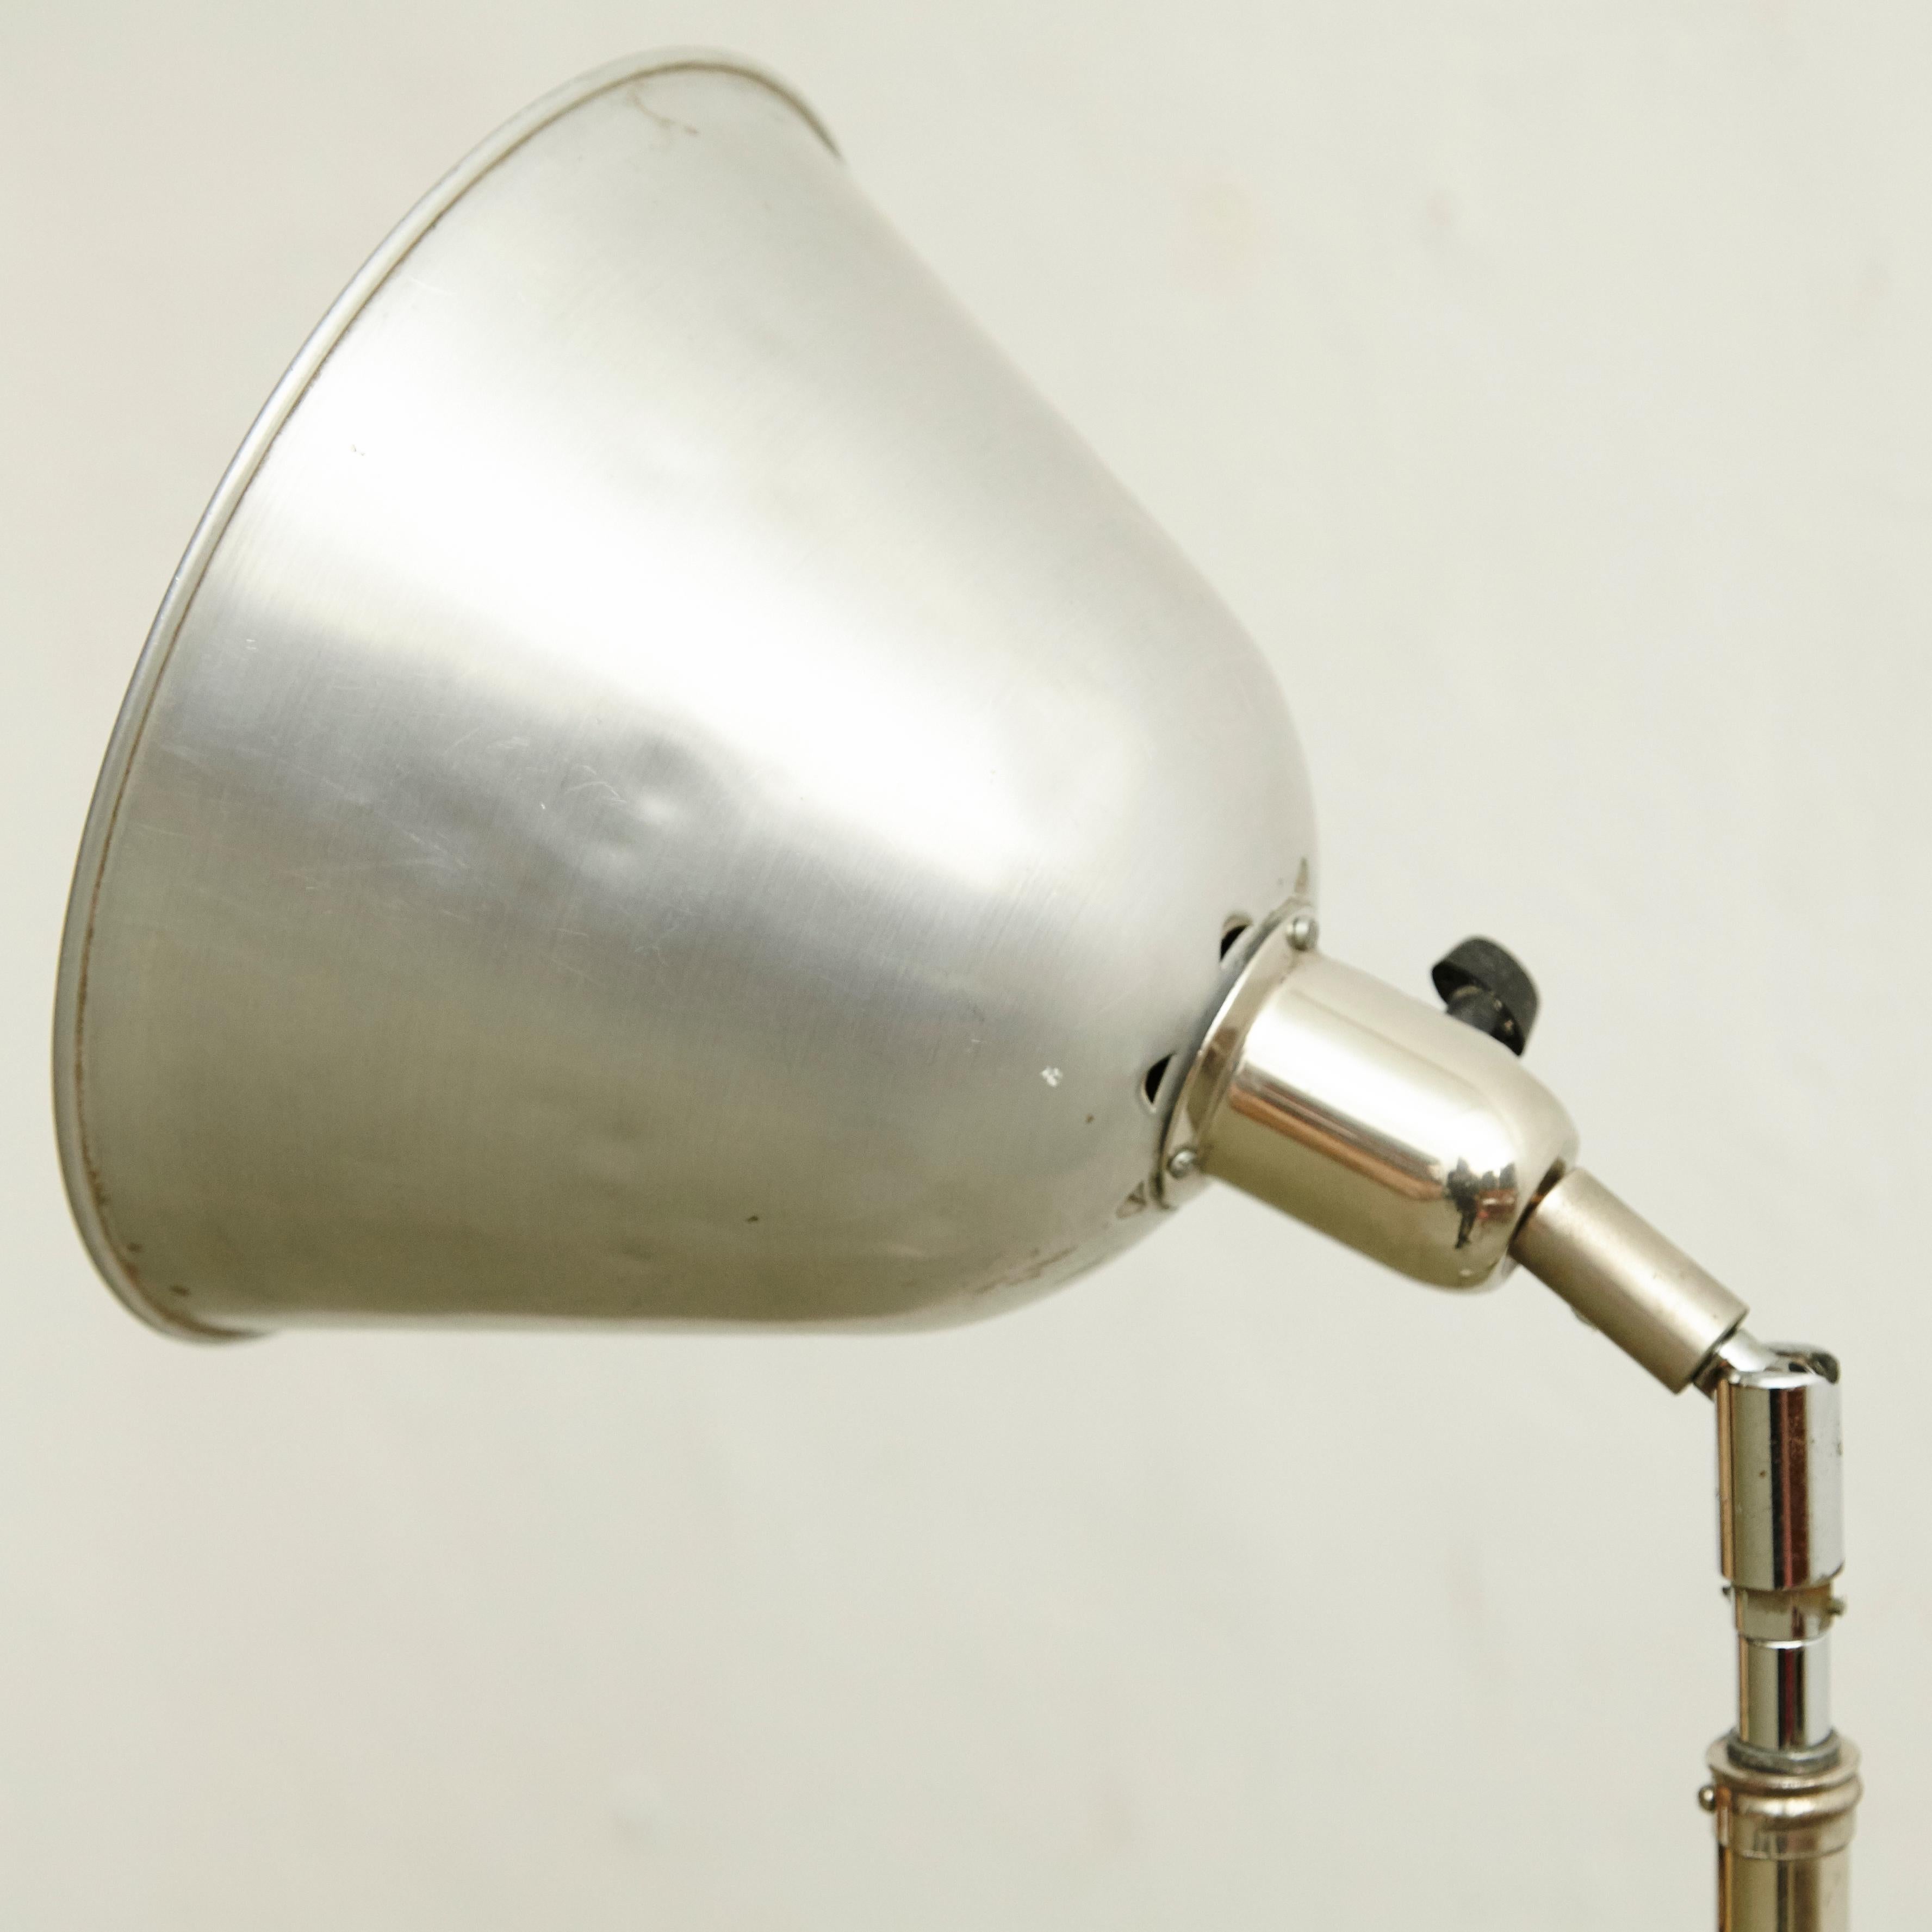 Aluminum Johan Petter Johansson Mid-Century Modern Triplex Telescopic Lamp, circa 1930